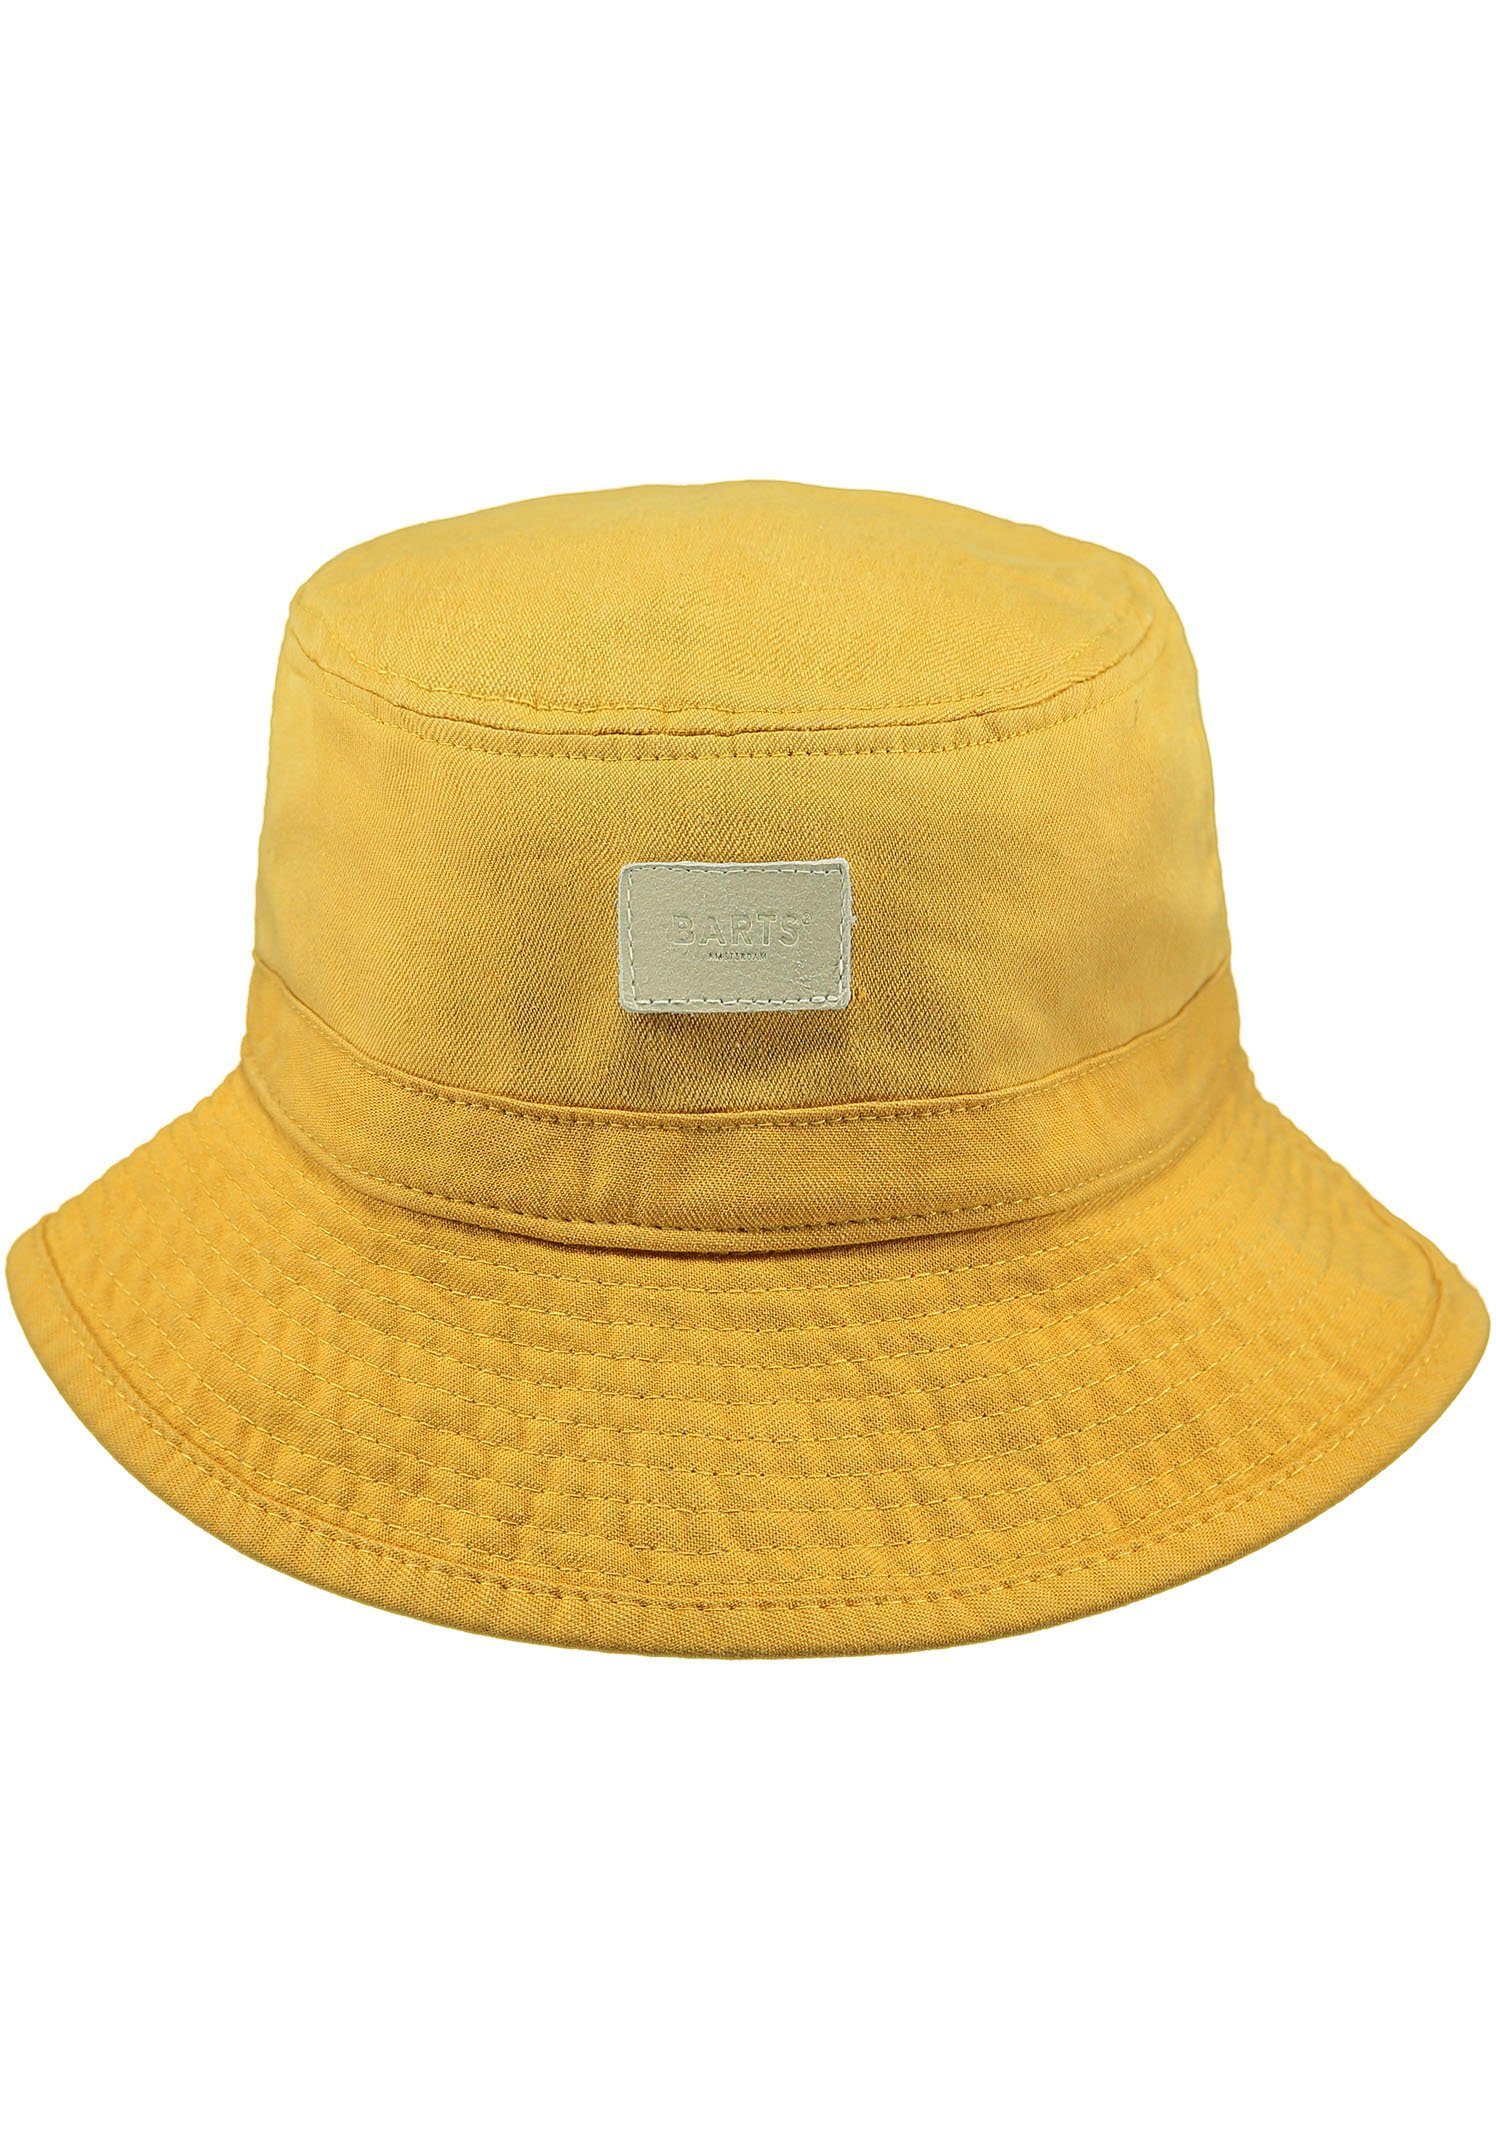 Barts Fischerhut Orohena Hat yellow